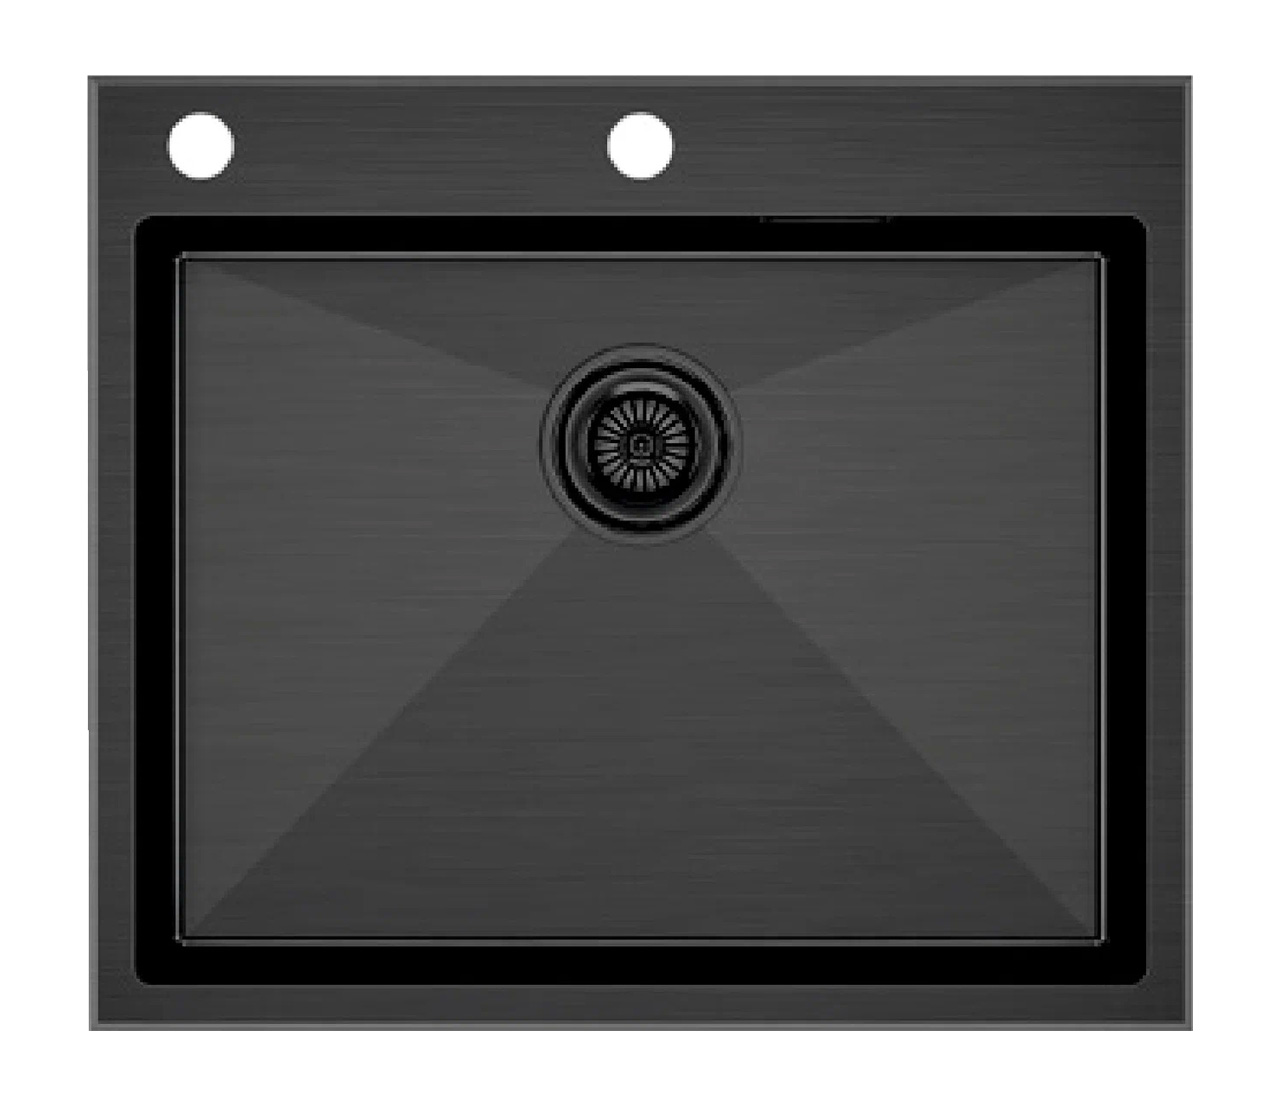 Кухонная мойка Paulmark Brim-Edge PM775951-GM вороненая сталь, цвет черный